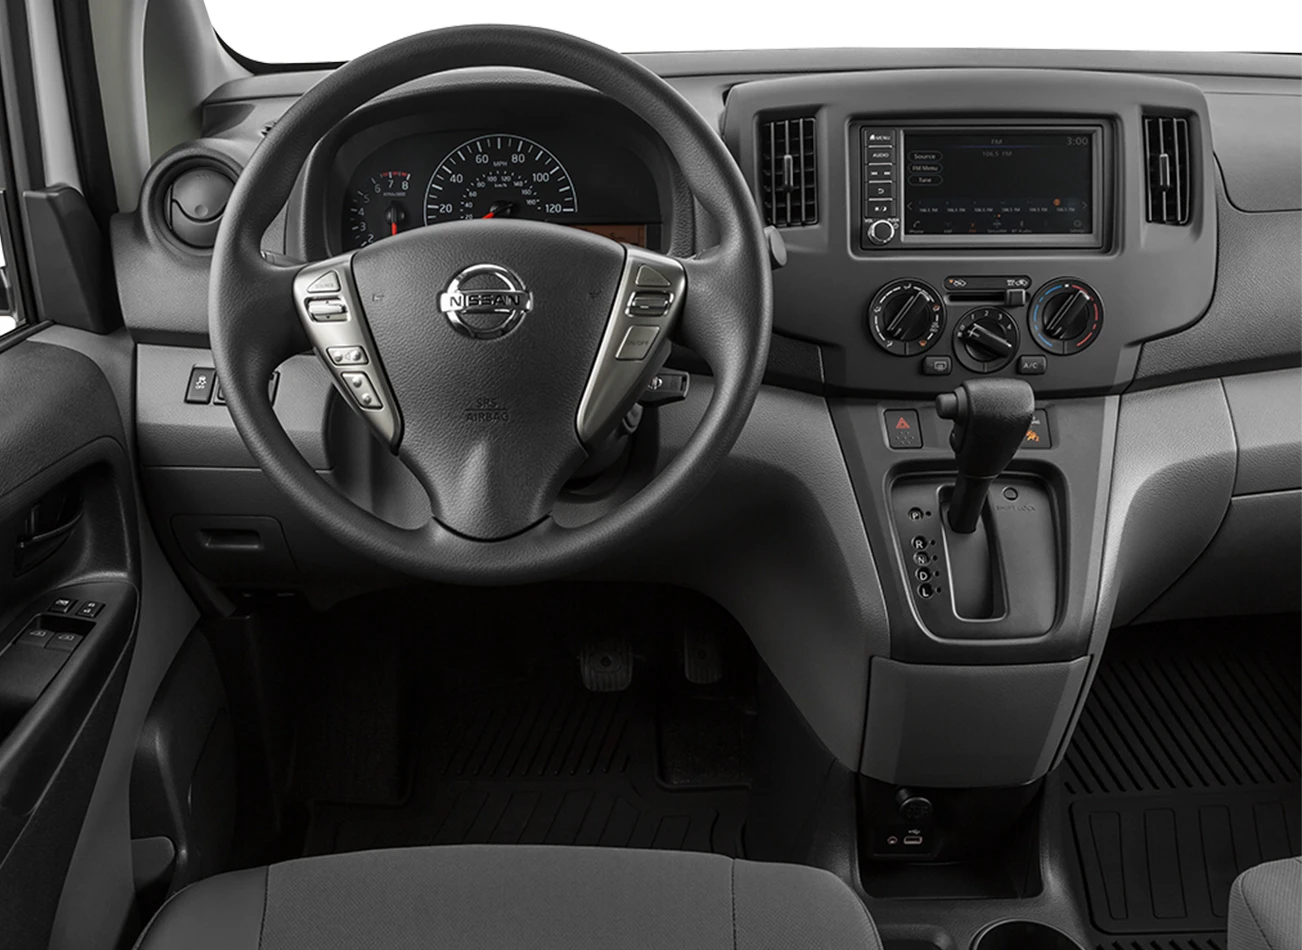 2020 Nissan NV200 Review: Dashboard | CarMax